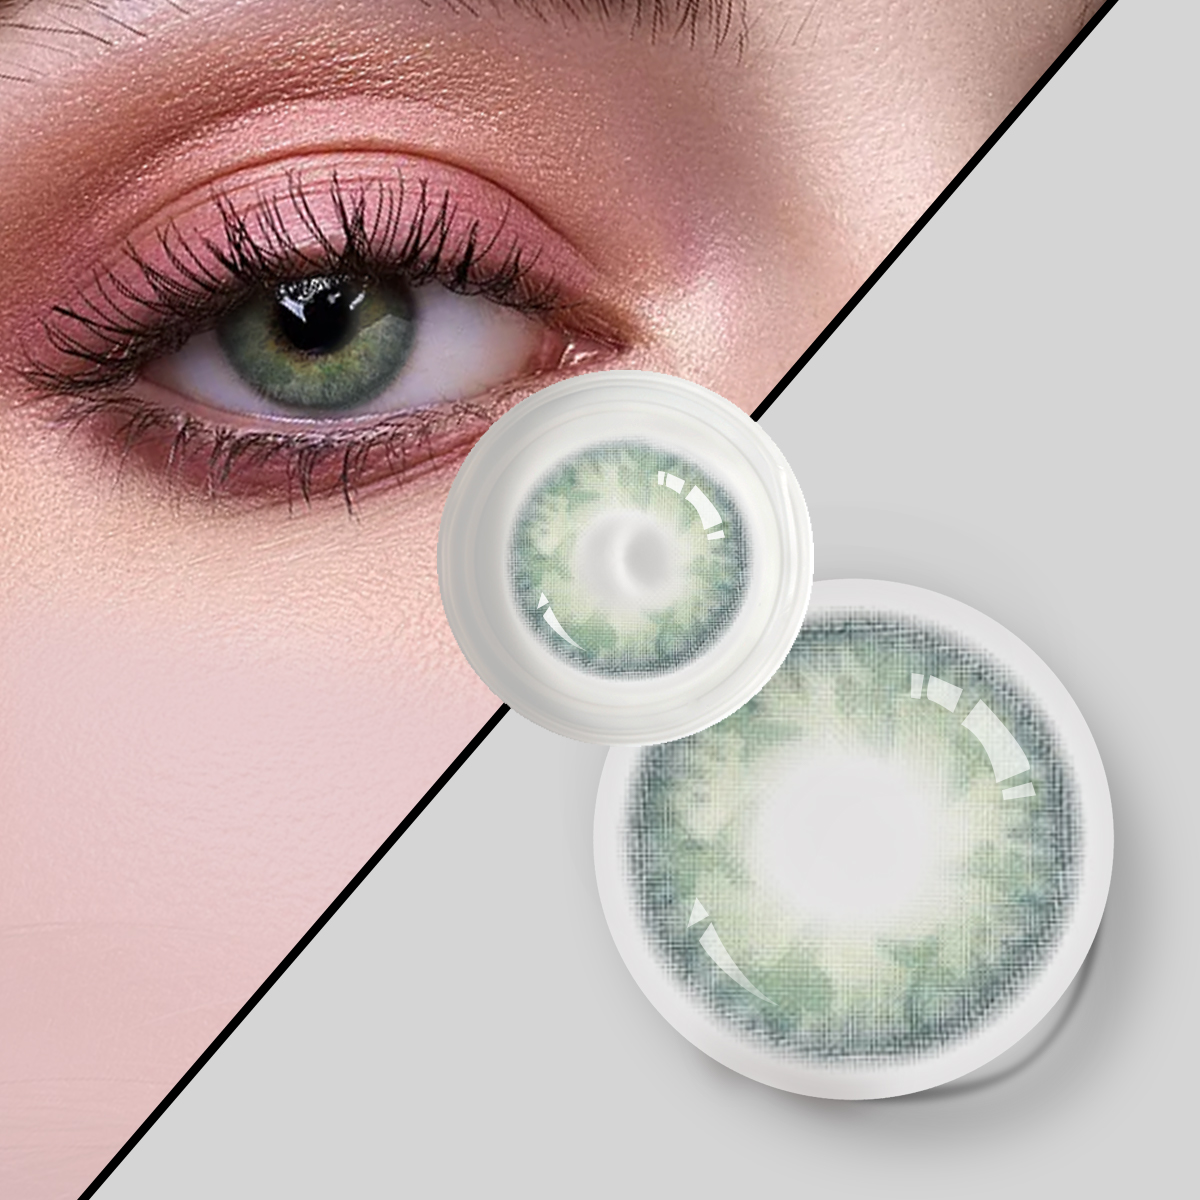 Divers Beauty Tone ירוק מראה חדש לשנה חד פעמי 14.2 מ"מ גודל עיניים גדולות סיטונאי עדשות מגע צבעוניות לעיניים